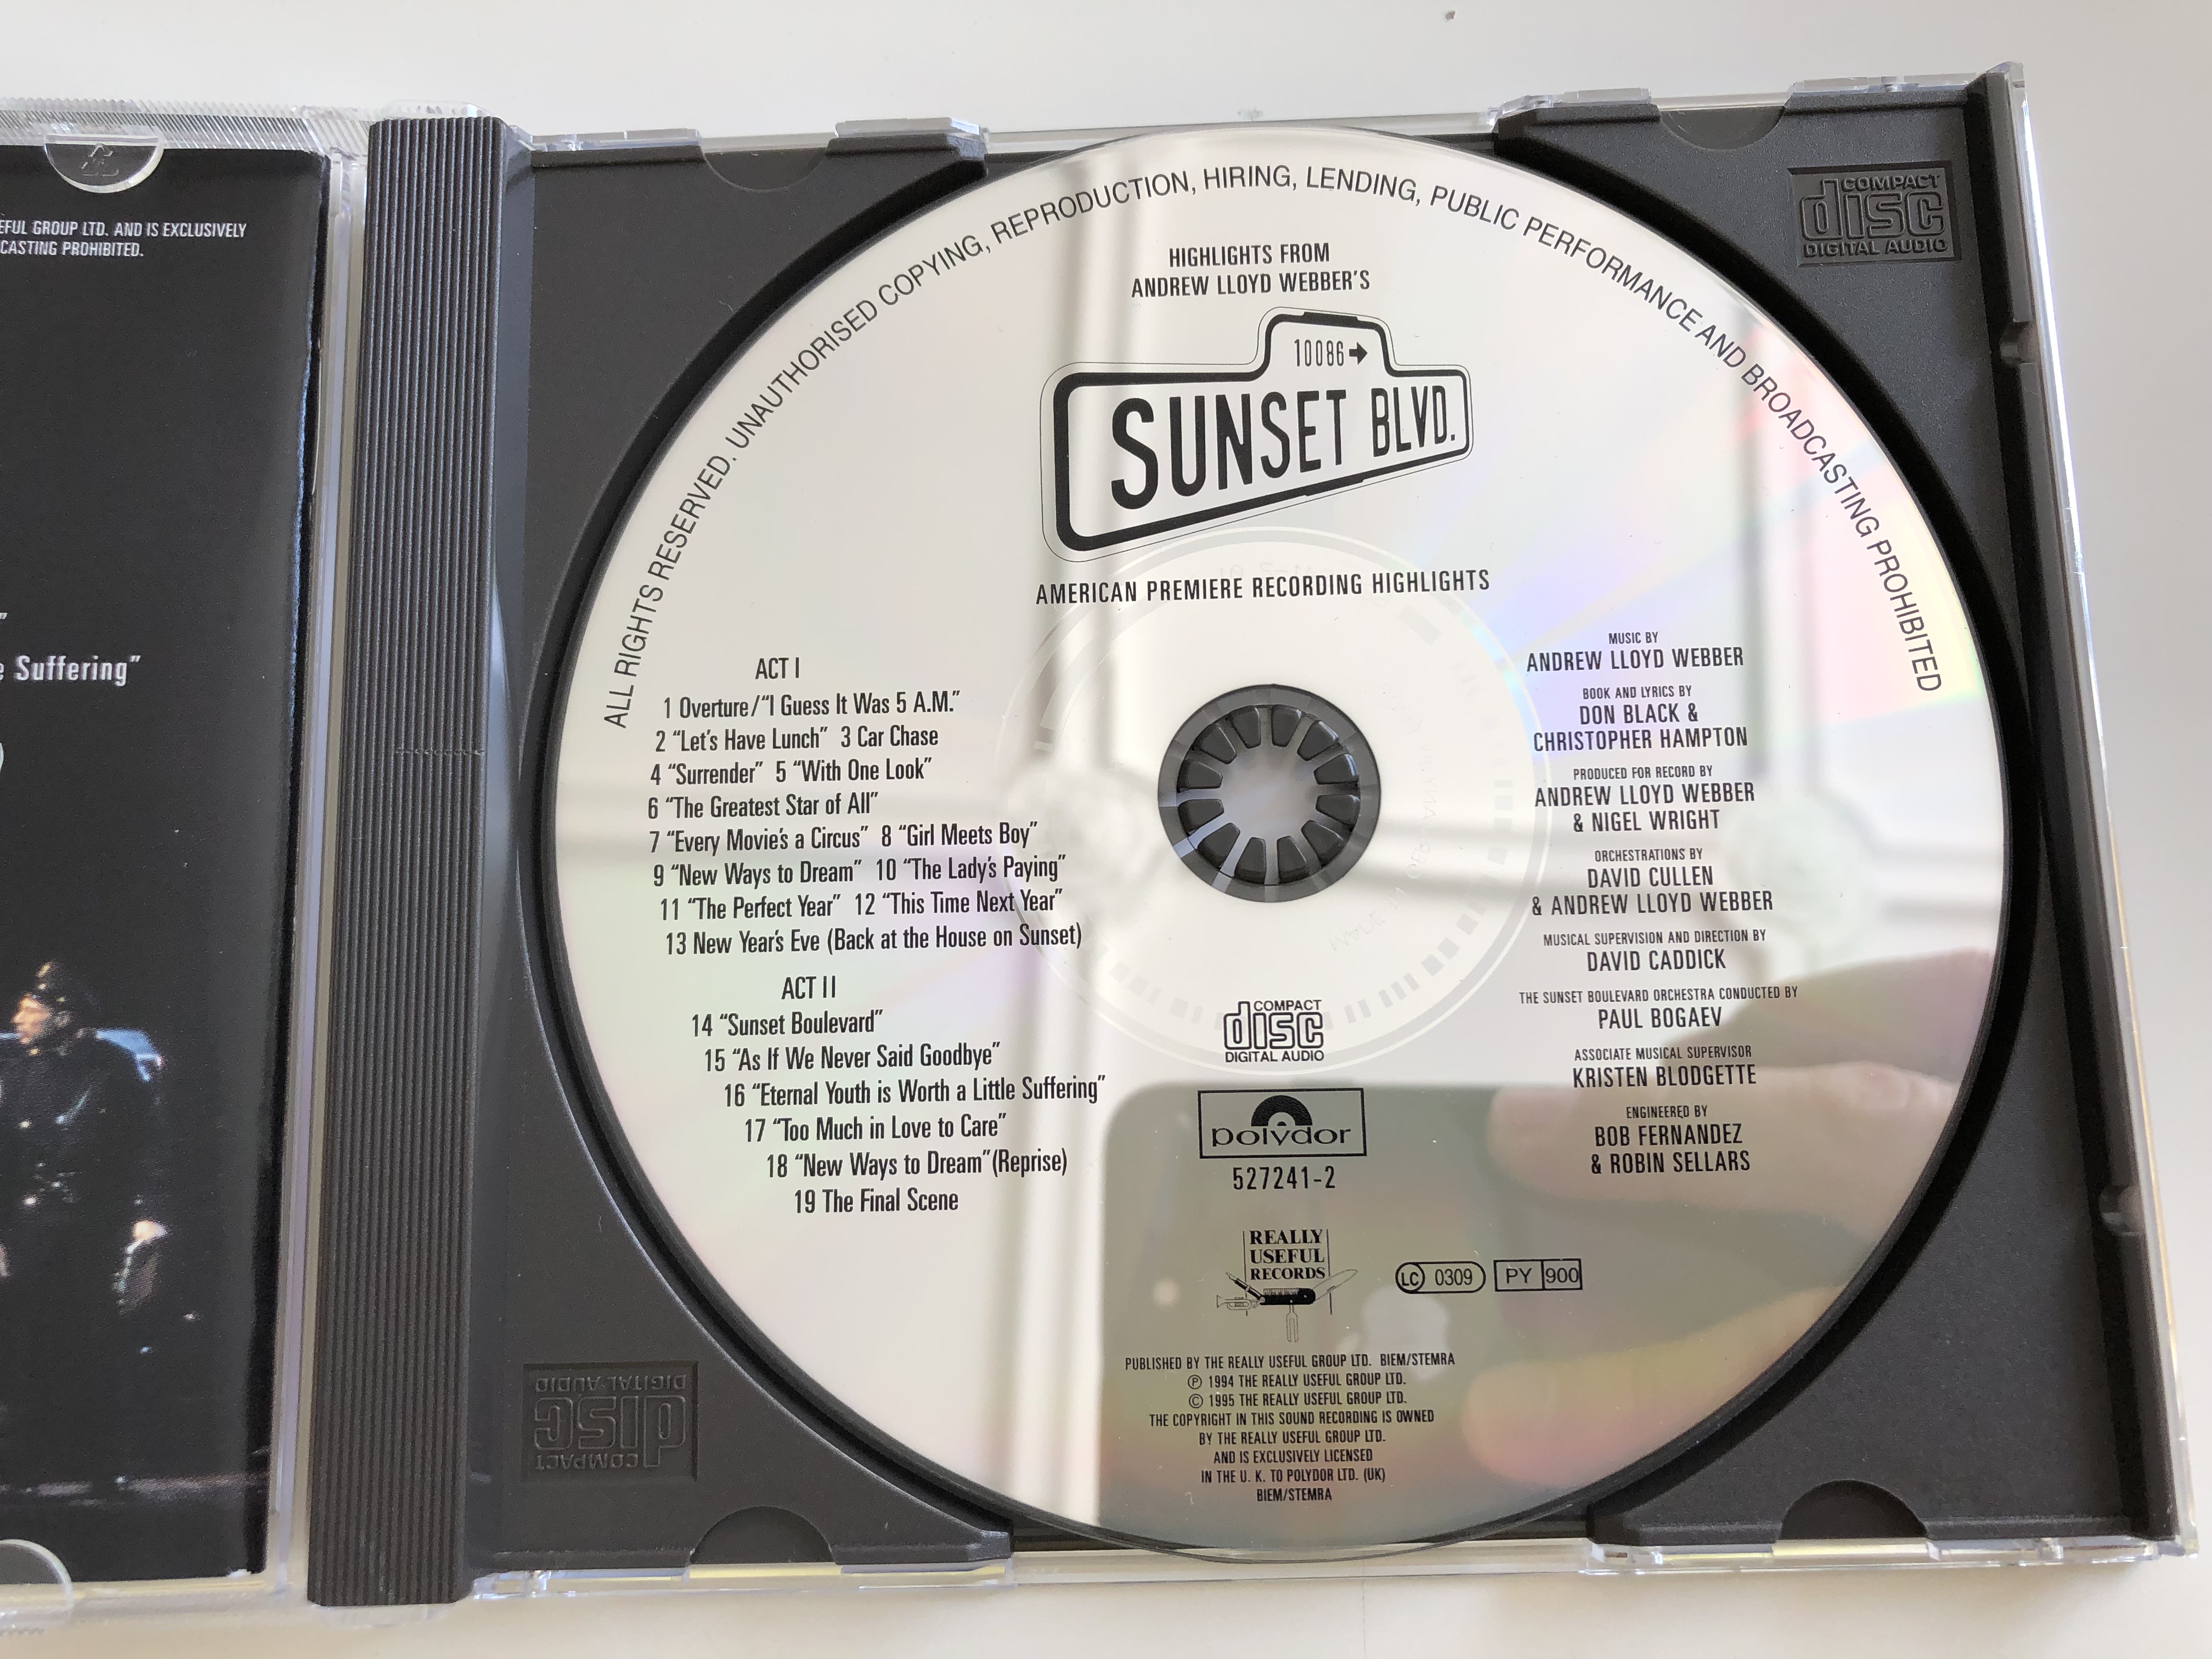 highlights-from-andrew-lloyd-webber-s-sunset-boulevard-starring-glenn-close-american-premiere-recording-highlights-audio-cd-1994-polydor-527241-2-3-.jpg